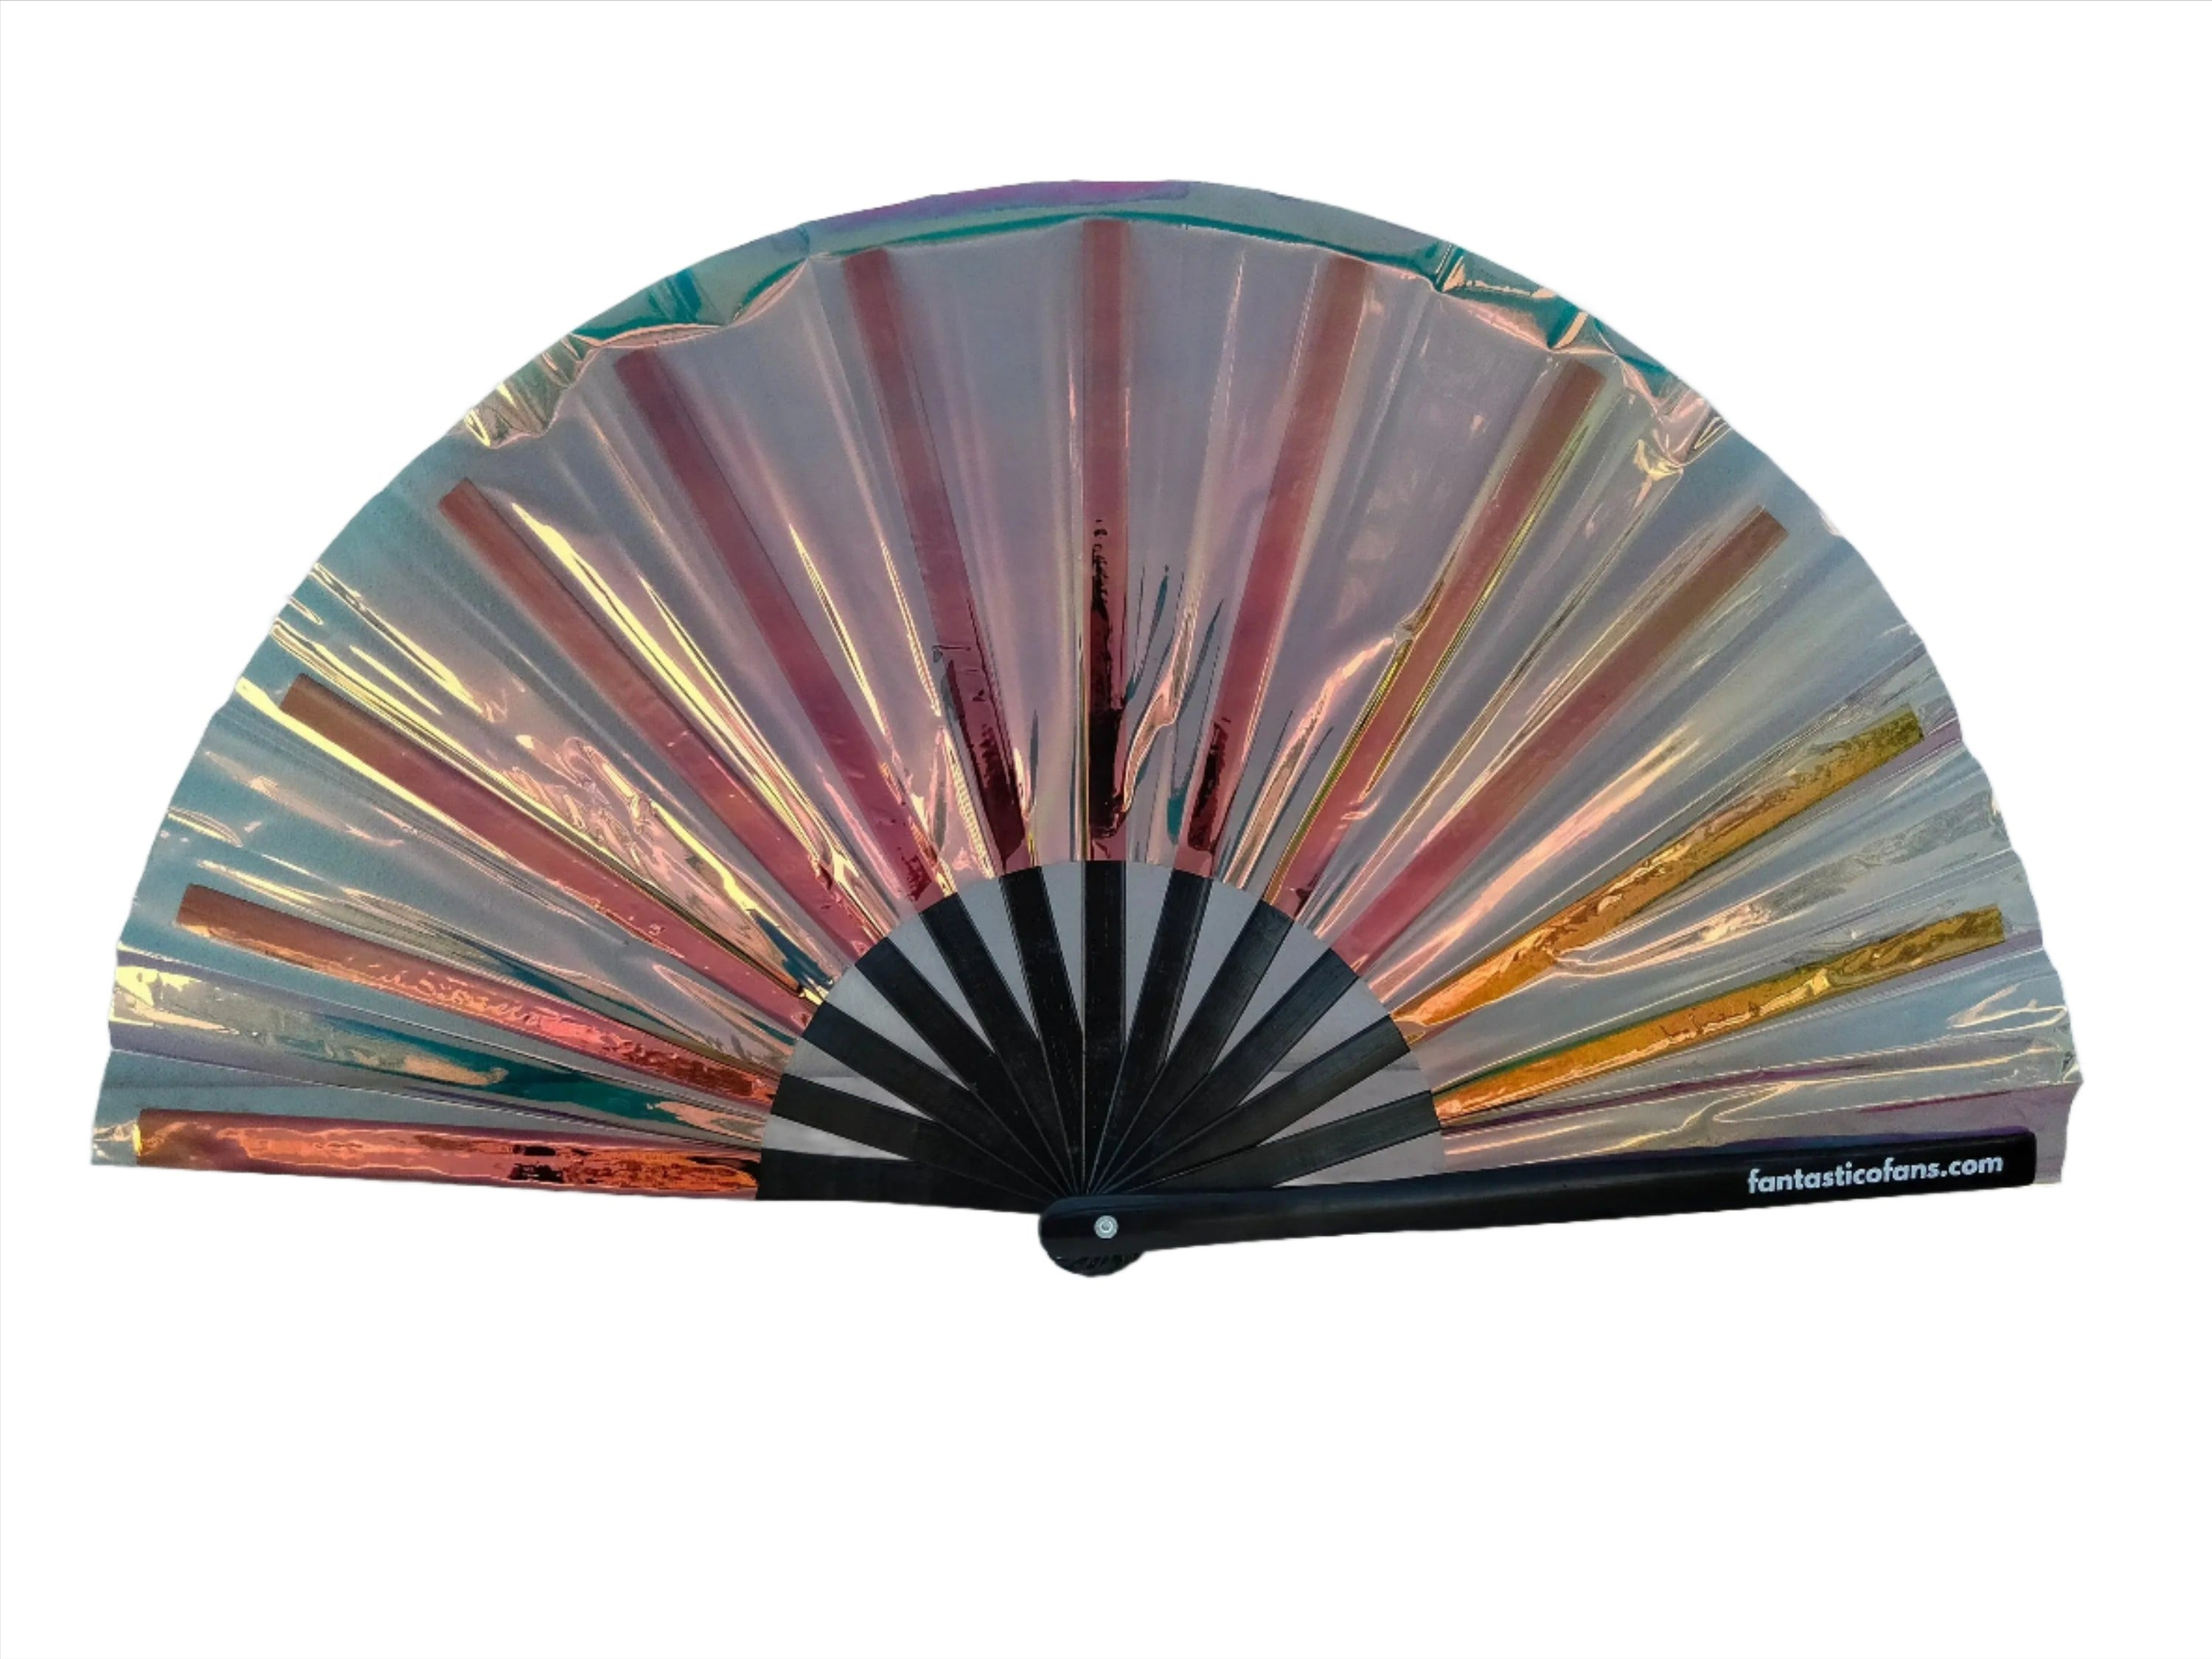 Holographic shimmer XL Fan - metallic Peacock